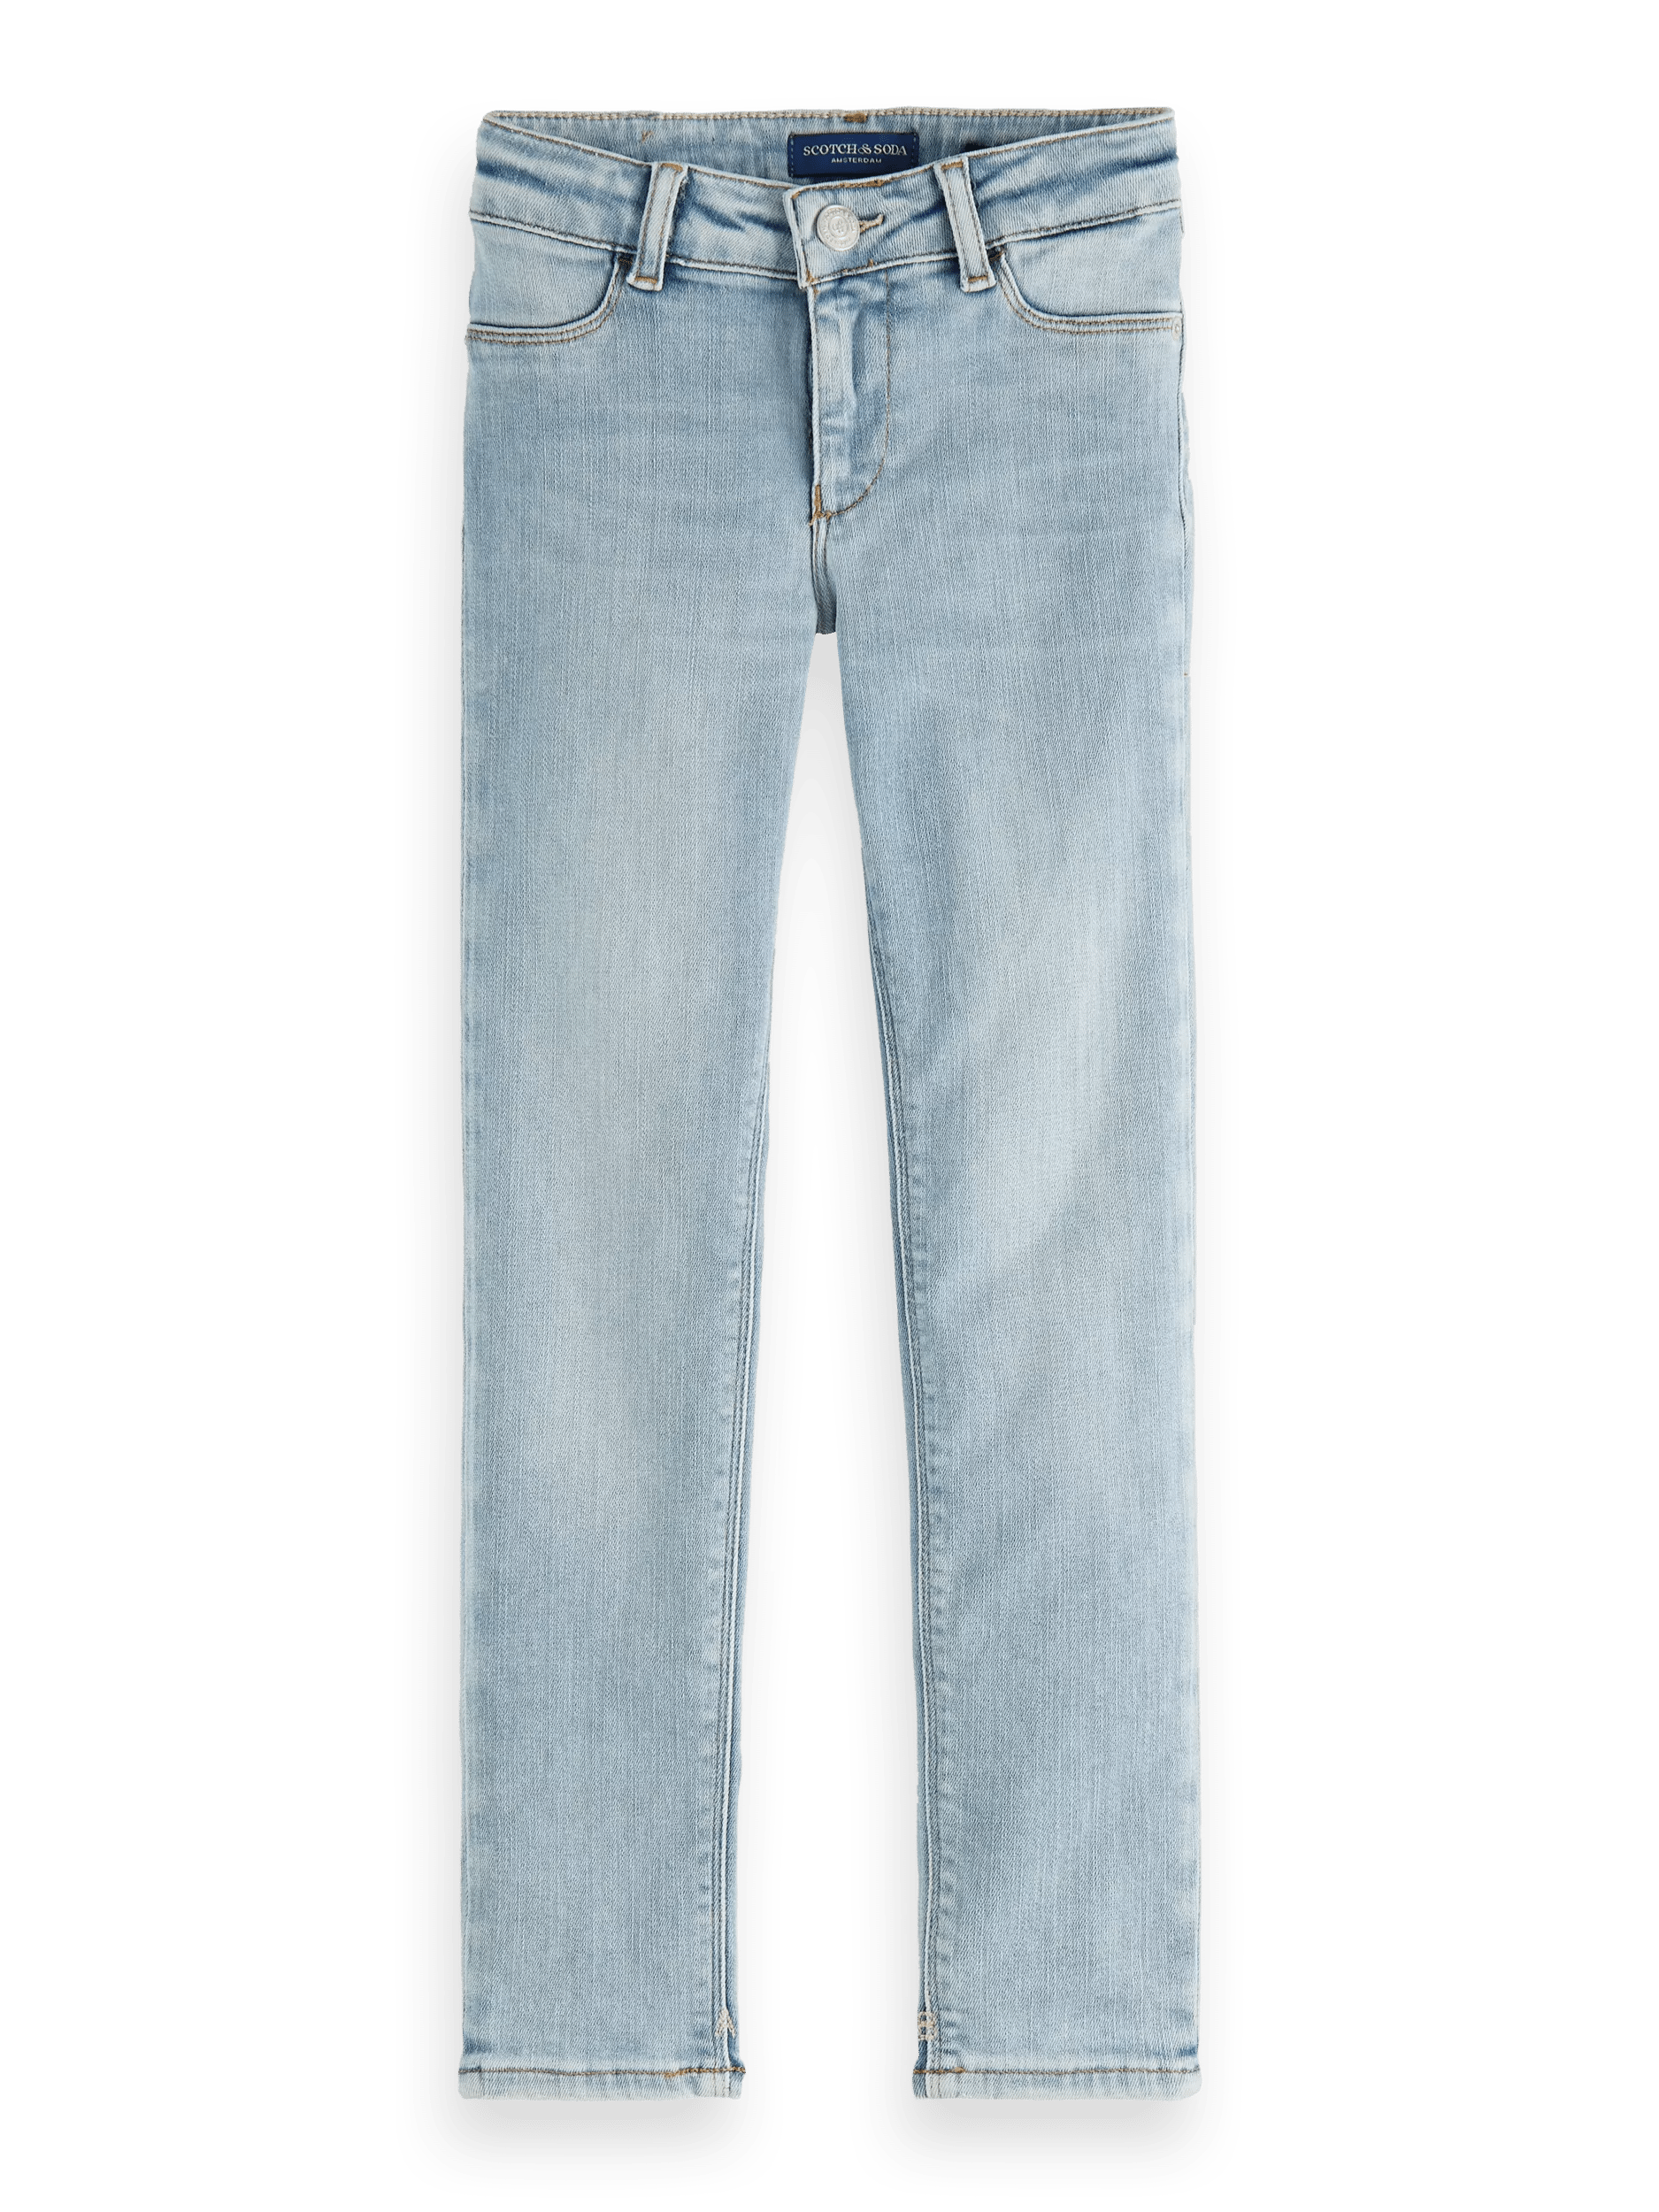 Scotch & Soda La Milou skinny jeans - Shore Blue FNT